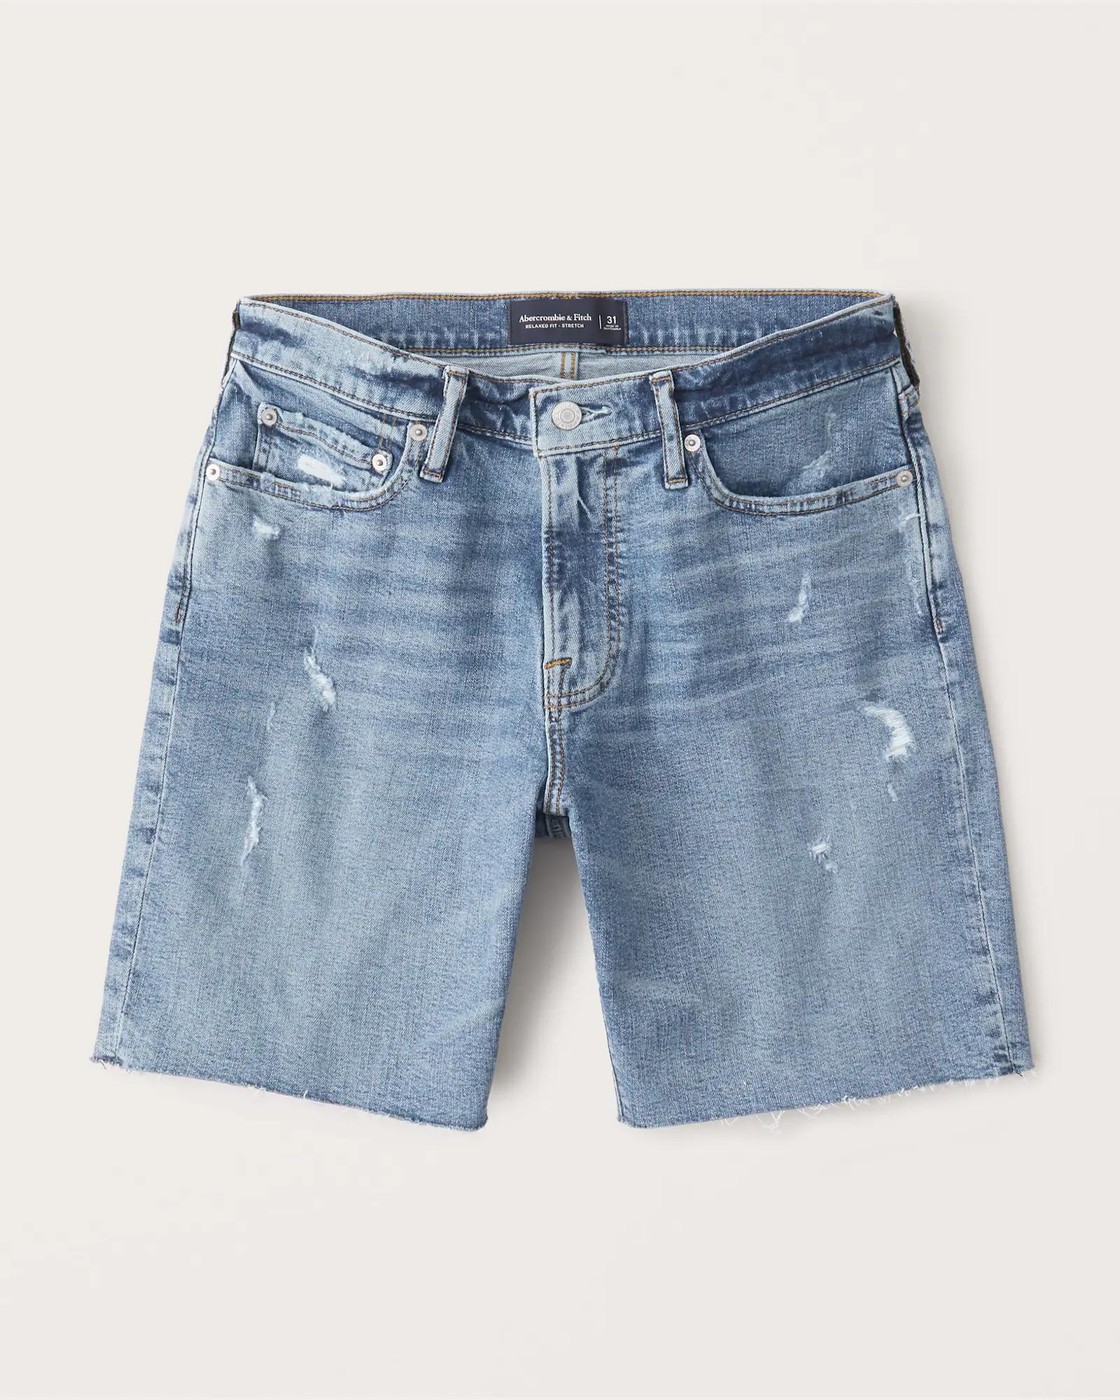 Шорты мужские - джинсовые шорты Abercrombie & Fitch, W34, W34